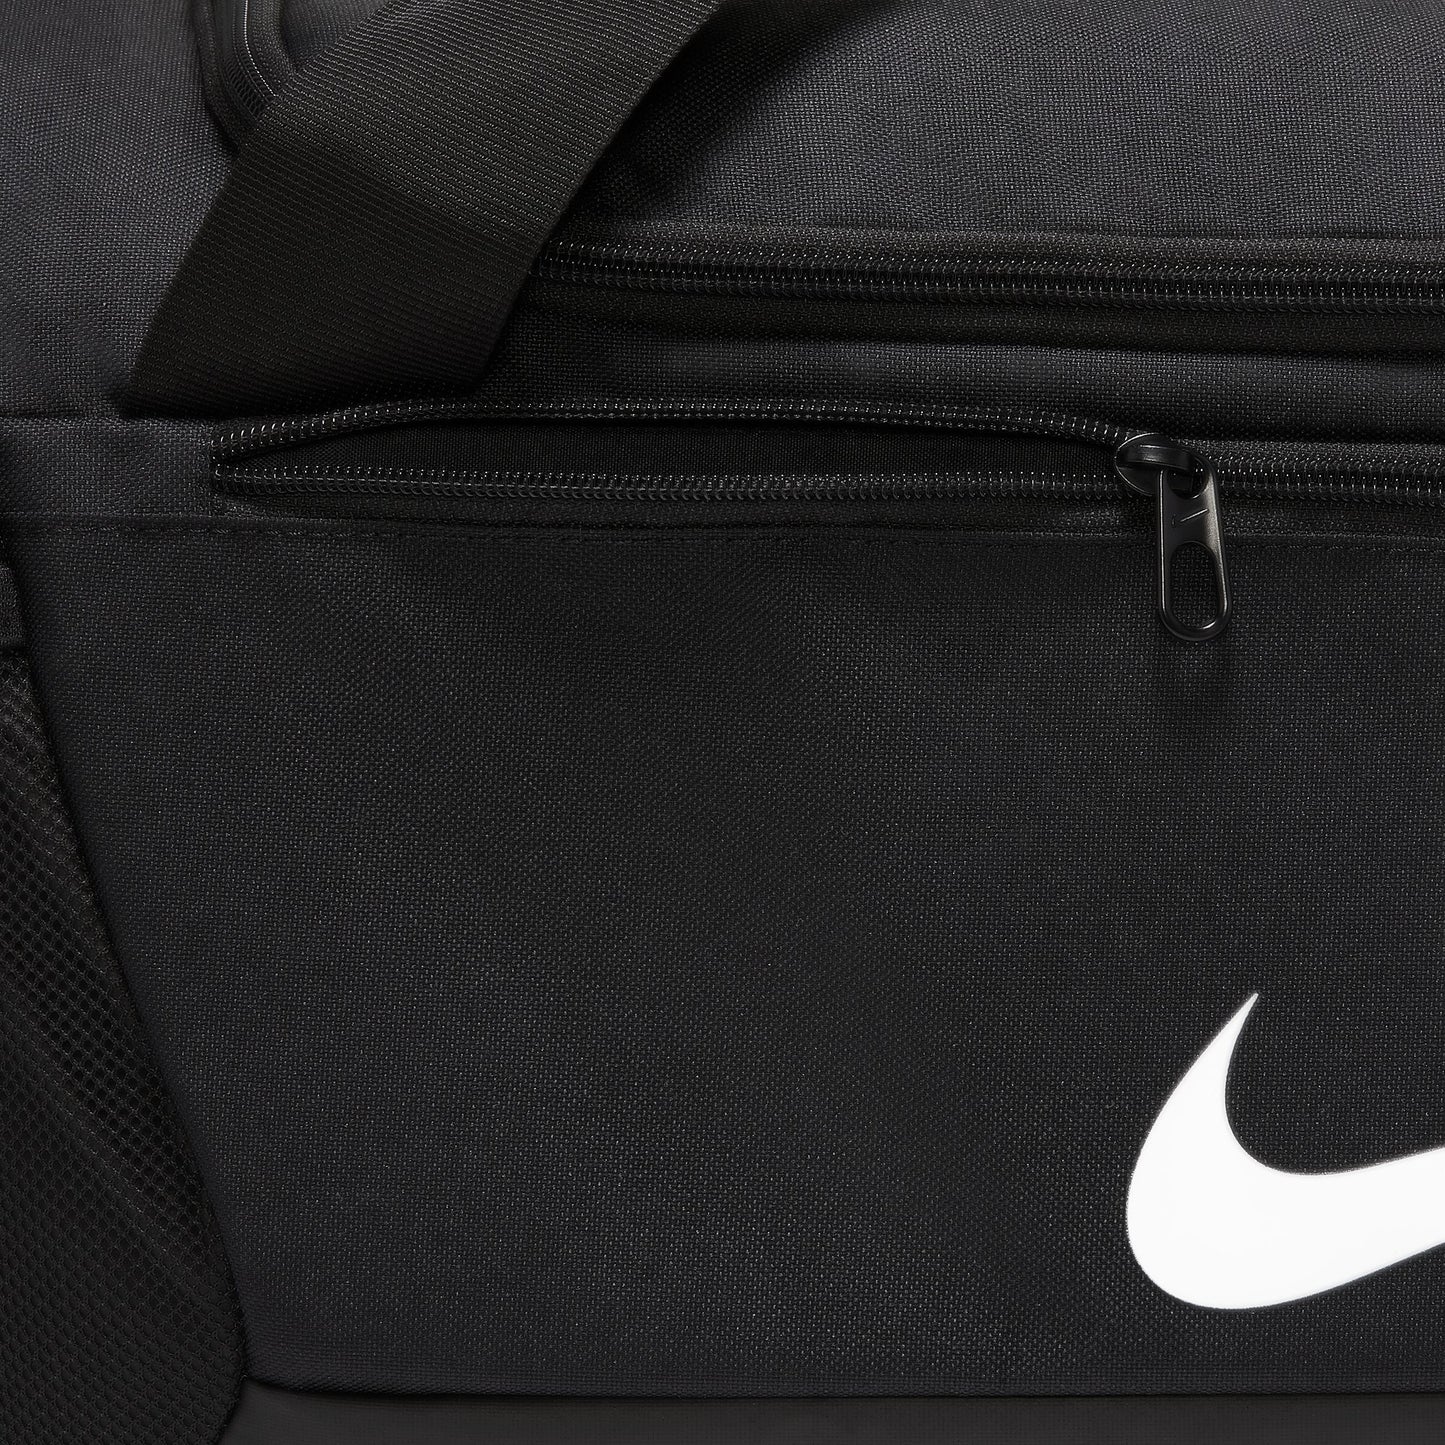 Bolsa de deporte de fútbol Nike Academy Team (41 L)